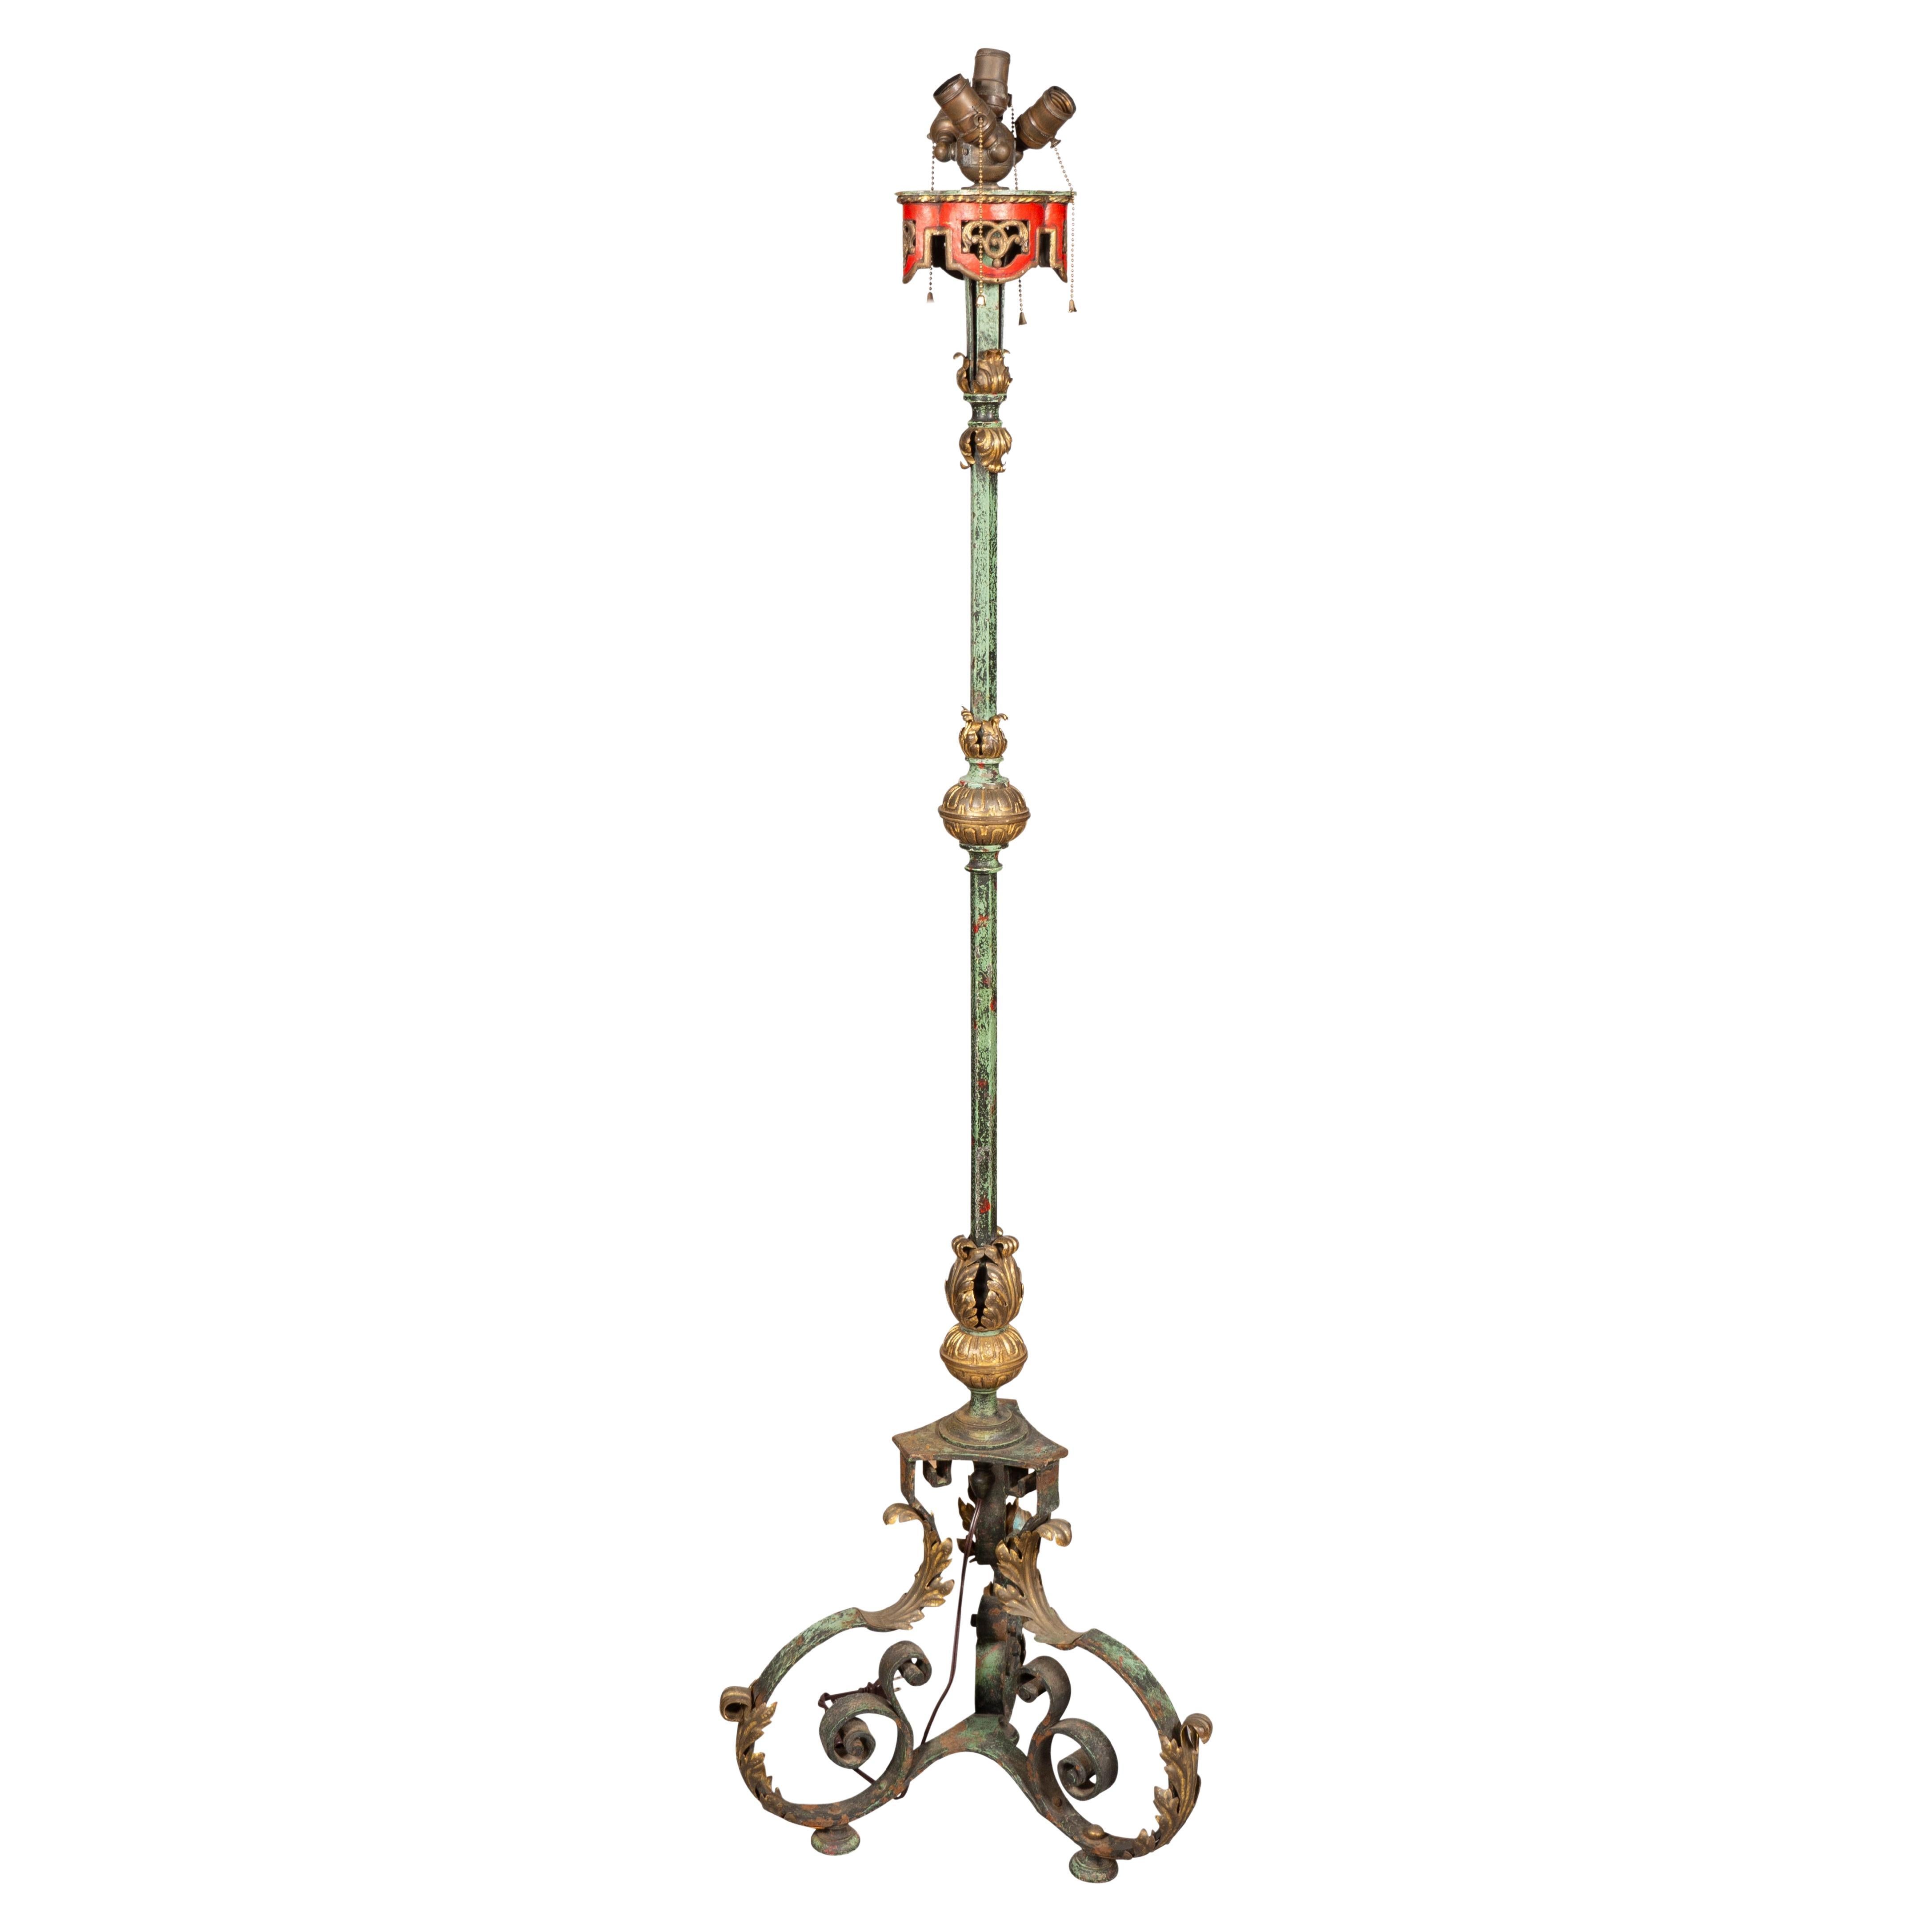 Renaissance Revival Brass And Iron Floor Lamp